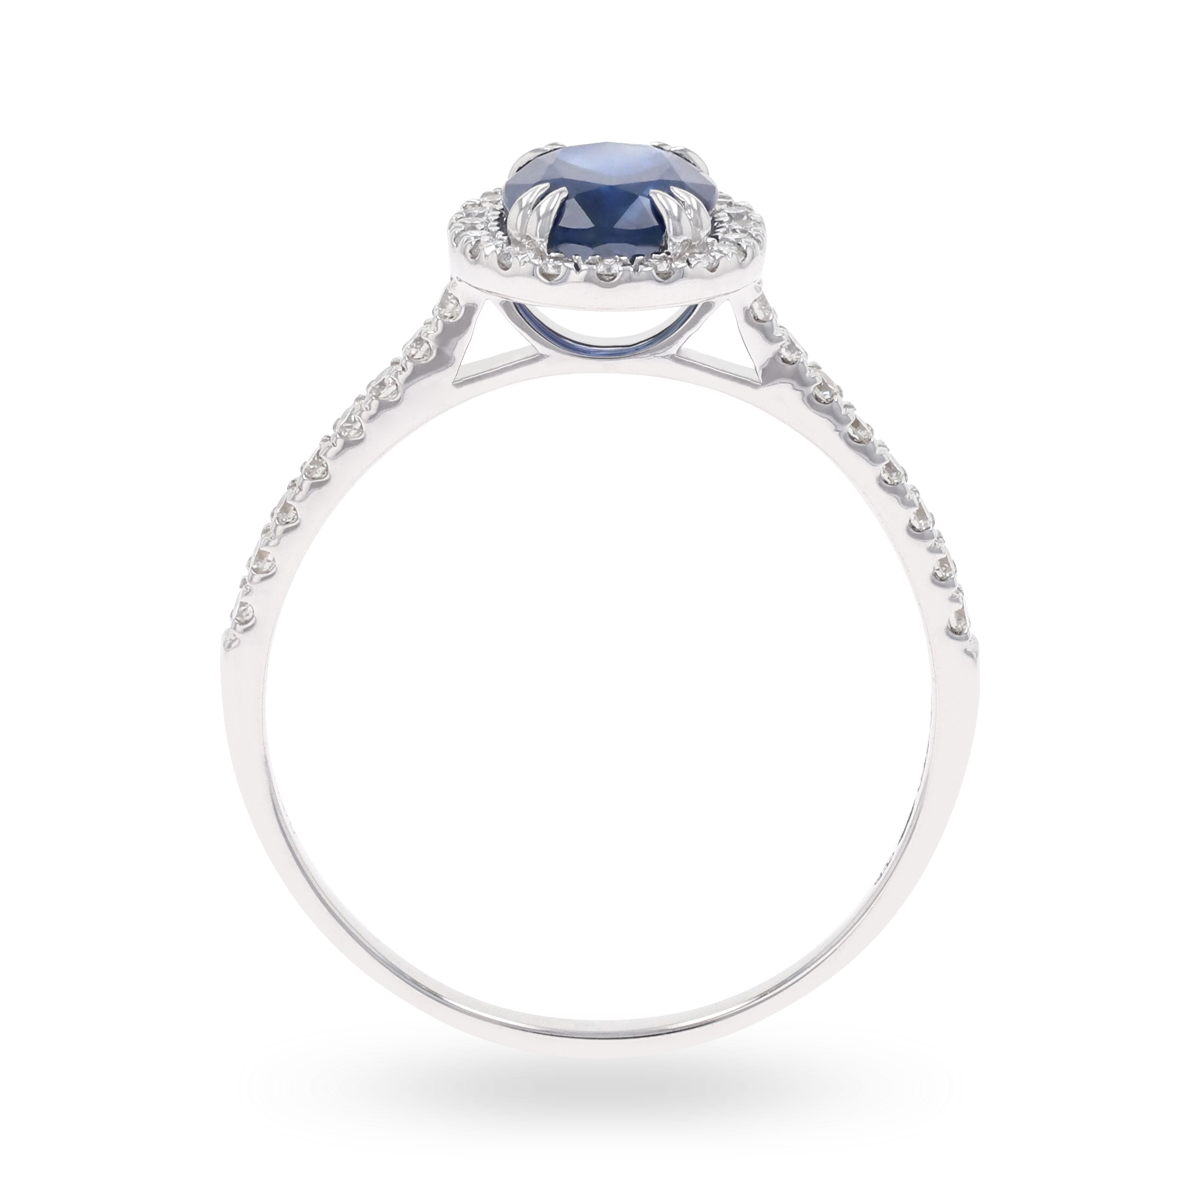 18ct White Gold Oval Cut Sapphire & Diamond Halo Ring